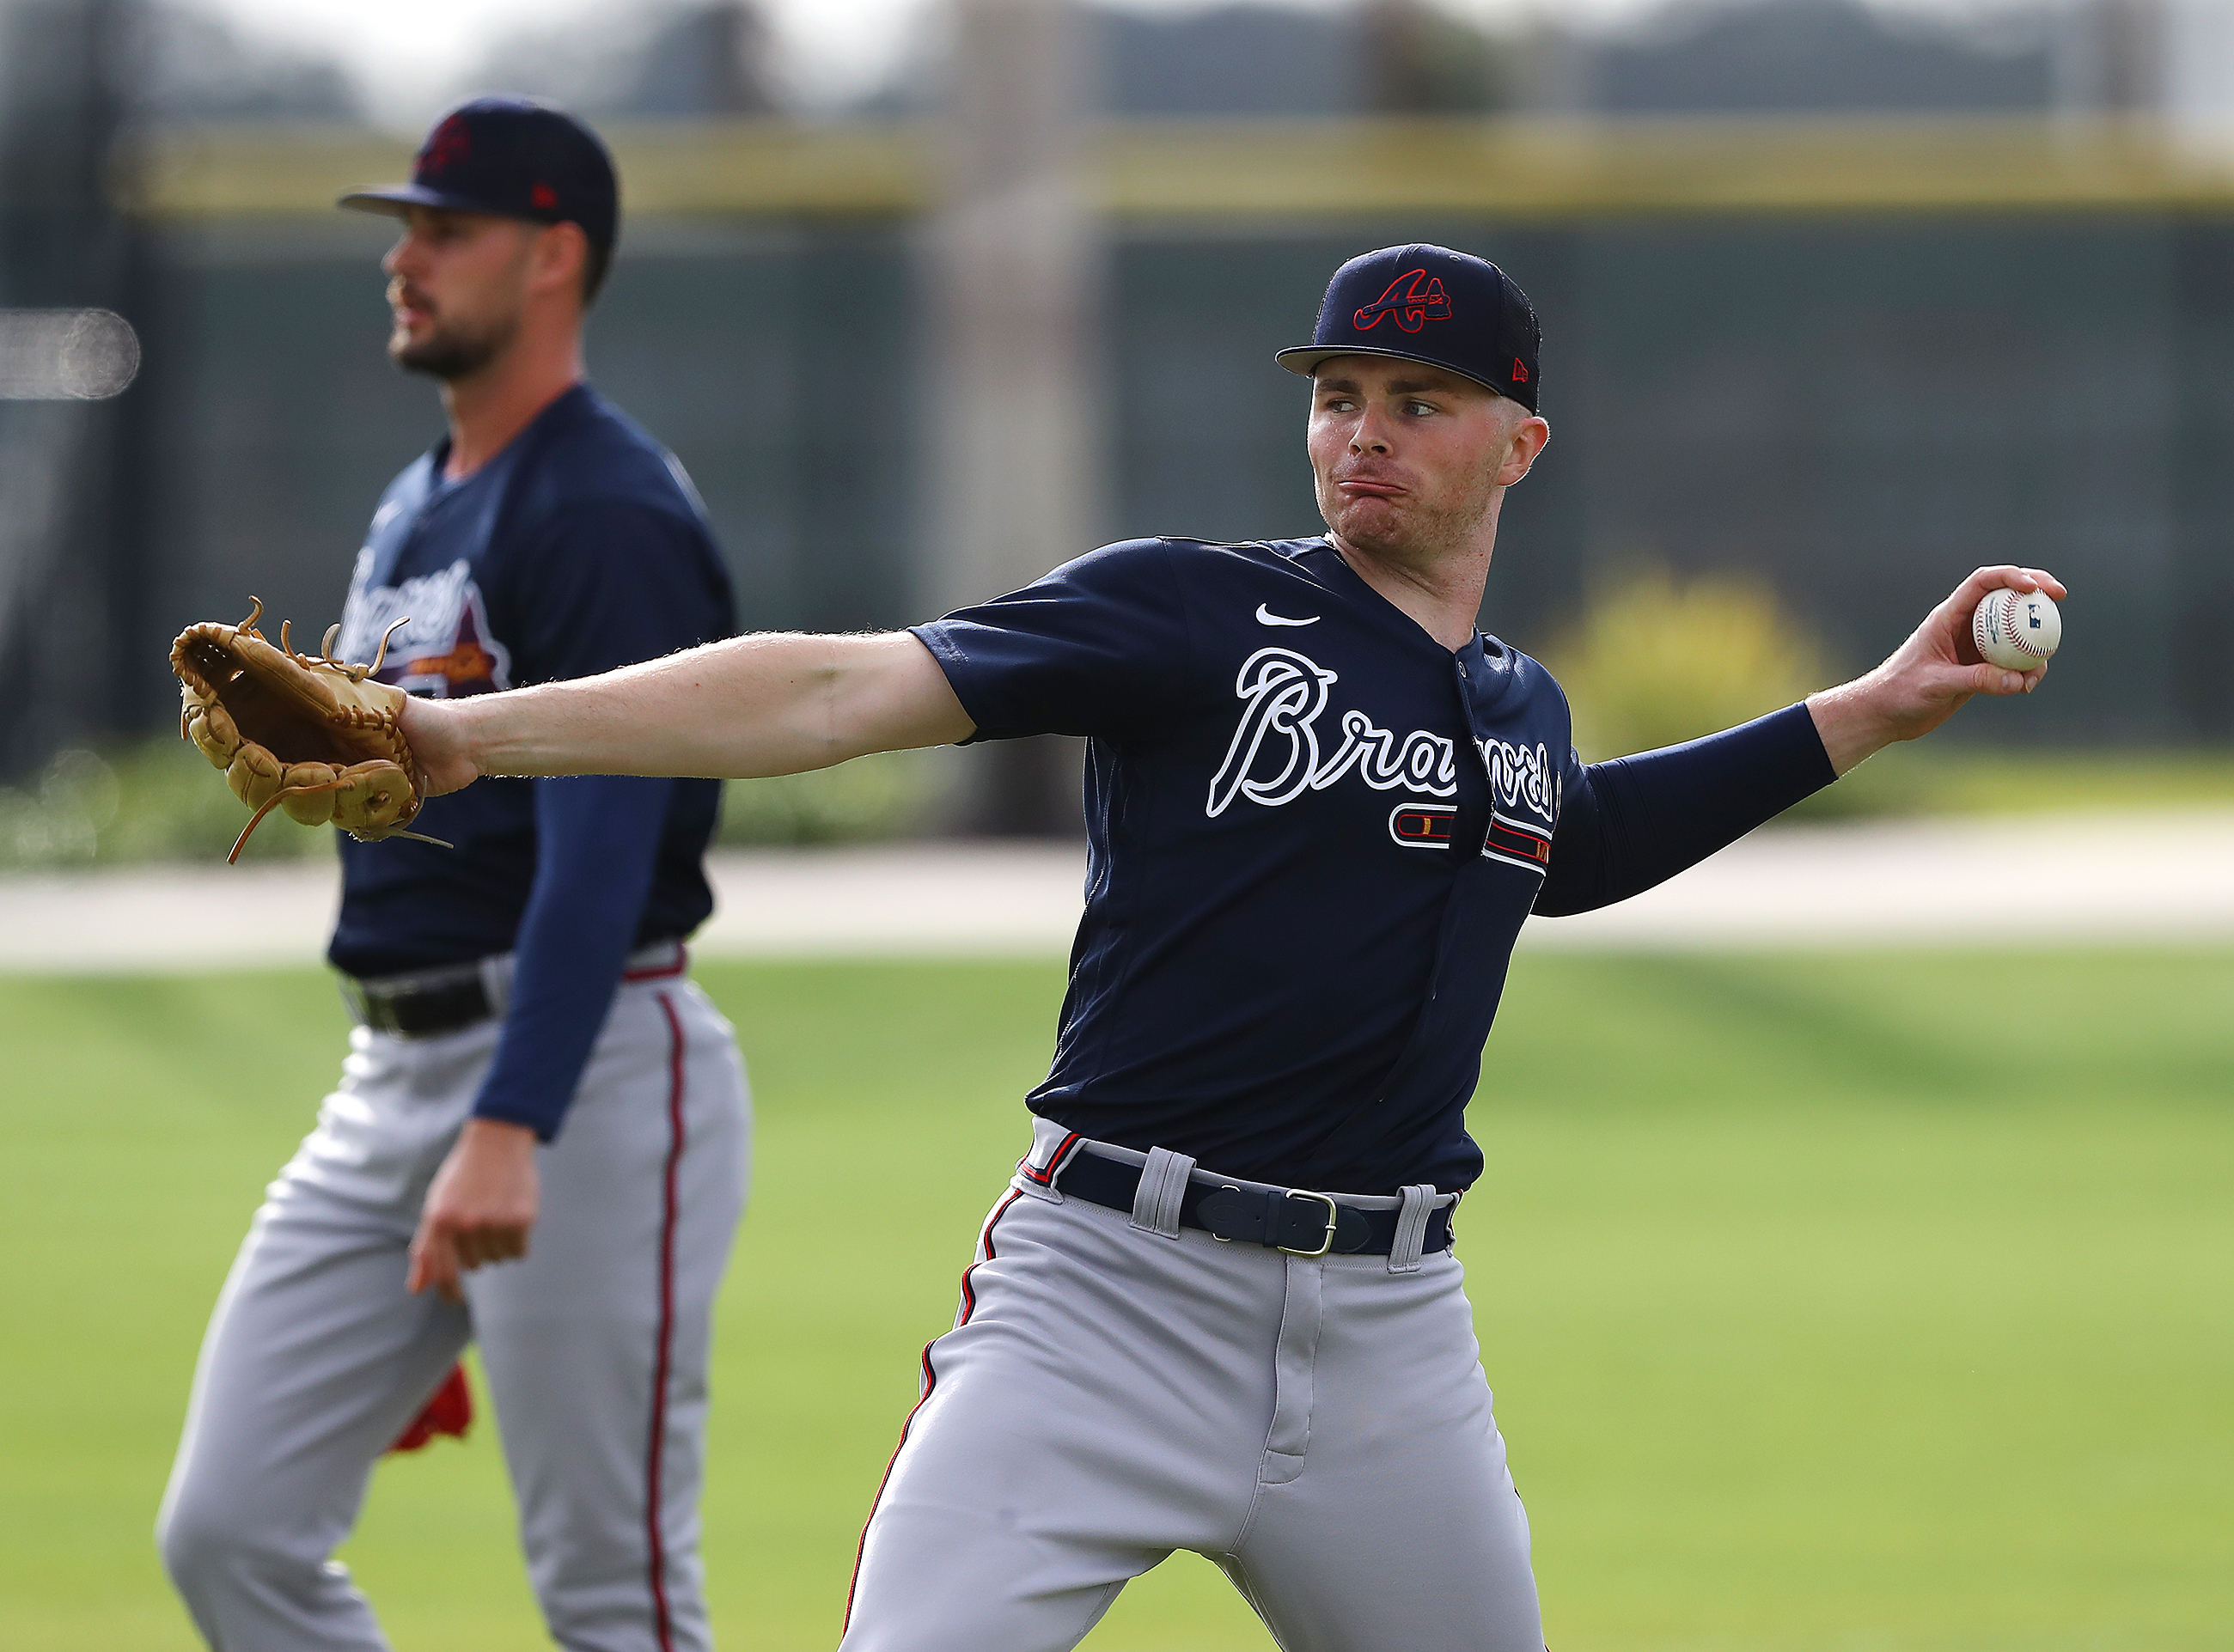 Photos: Braves welcome new first baseman Matt Olson at spring training